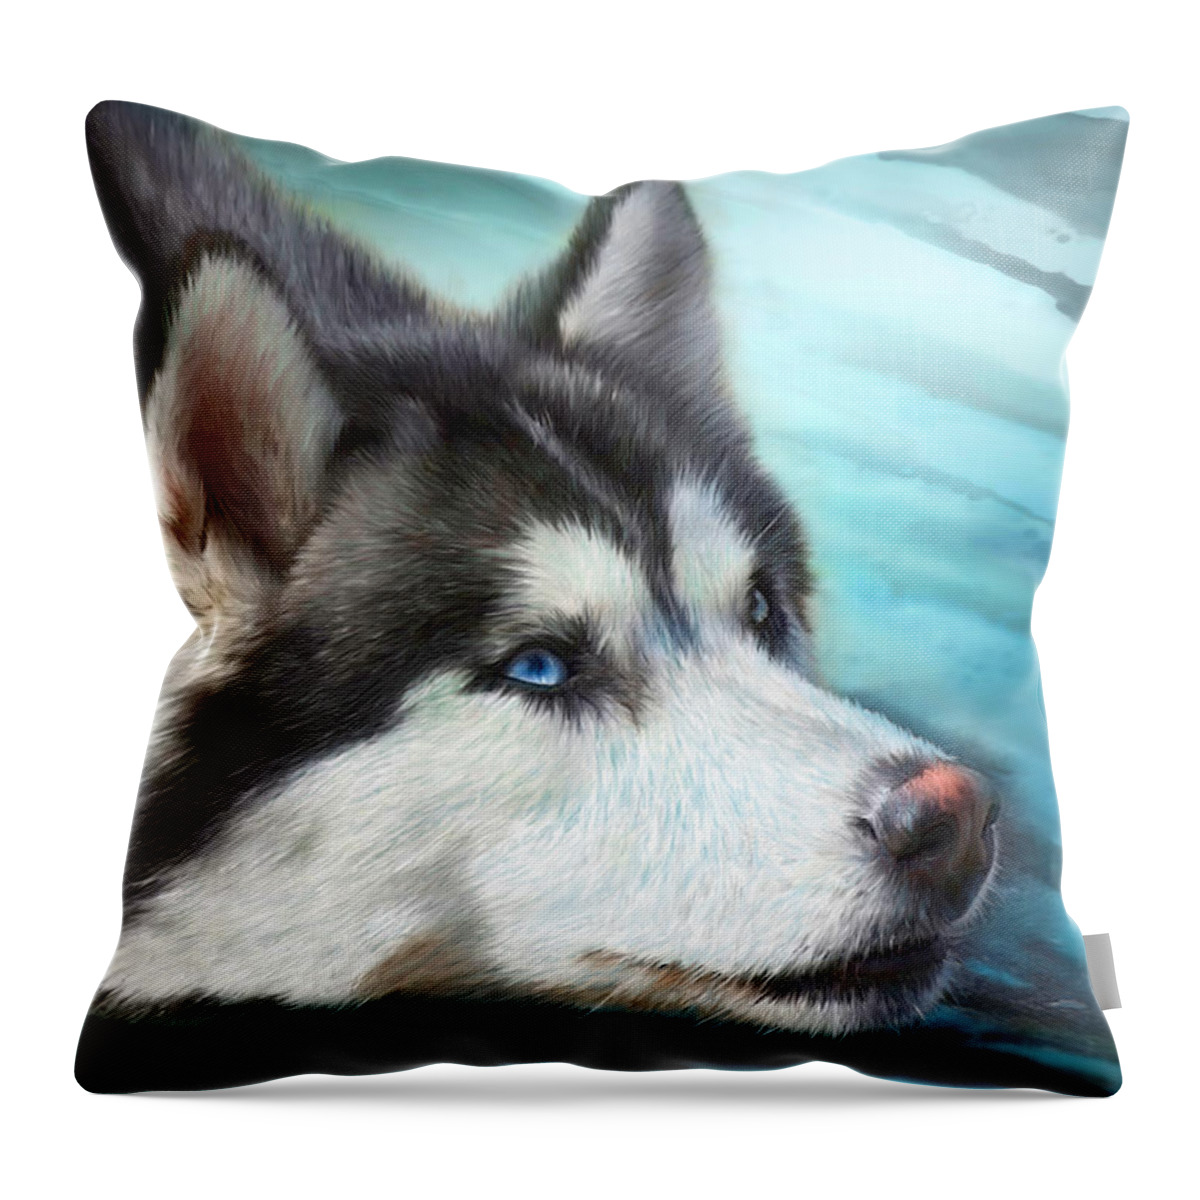 Siberian Husky Throw Pillow featuring the mixed media Siberian Husky by Carol Cavalaris